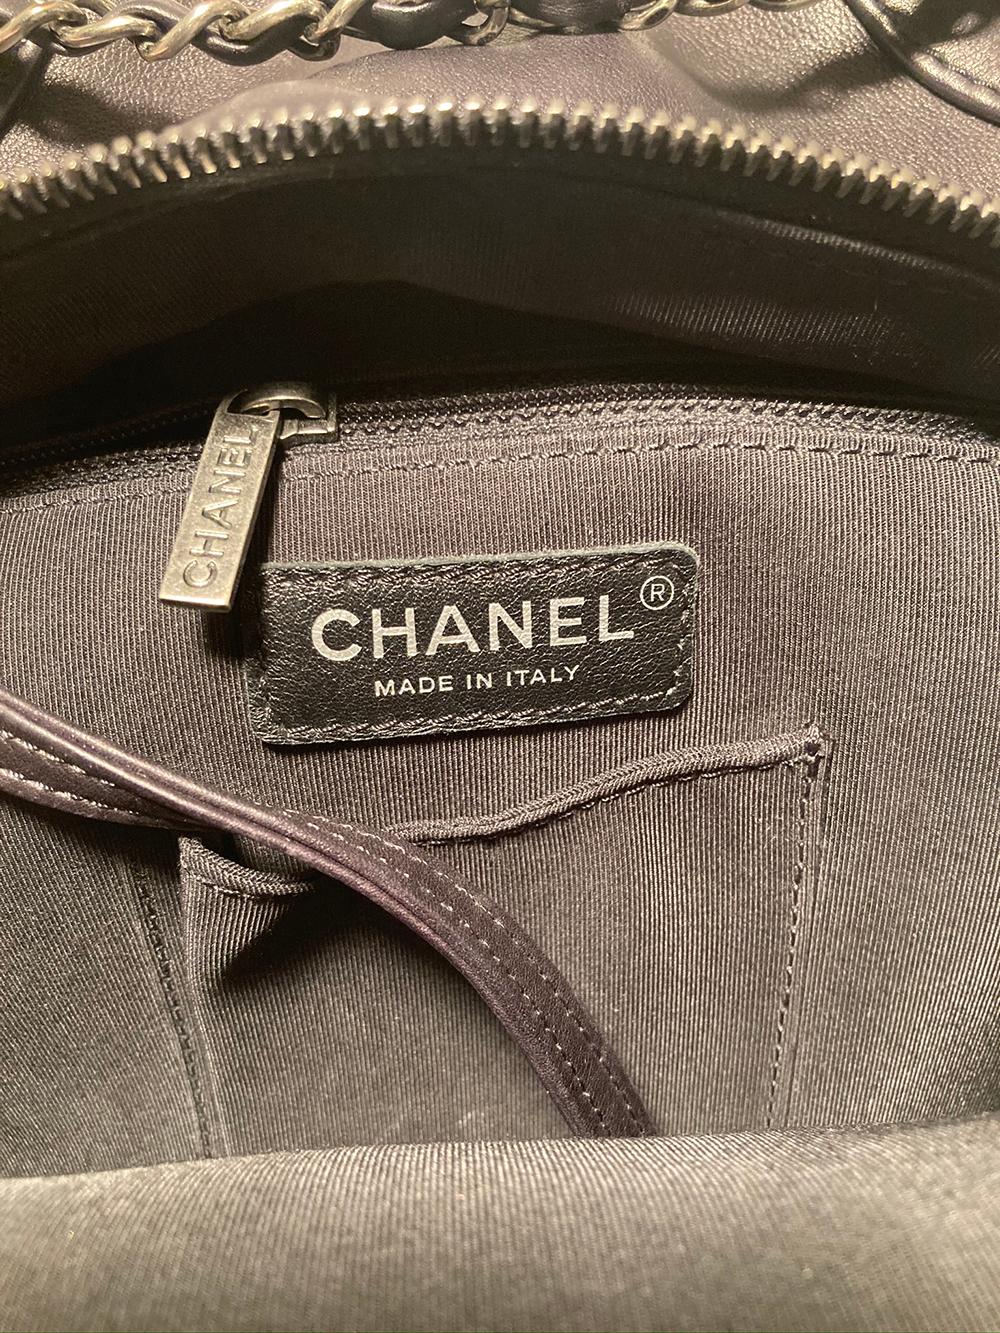 Chanel Black Leather Drawstring Backpack For Sale 2